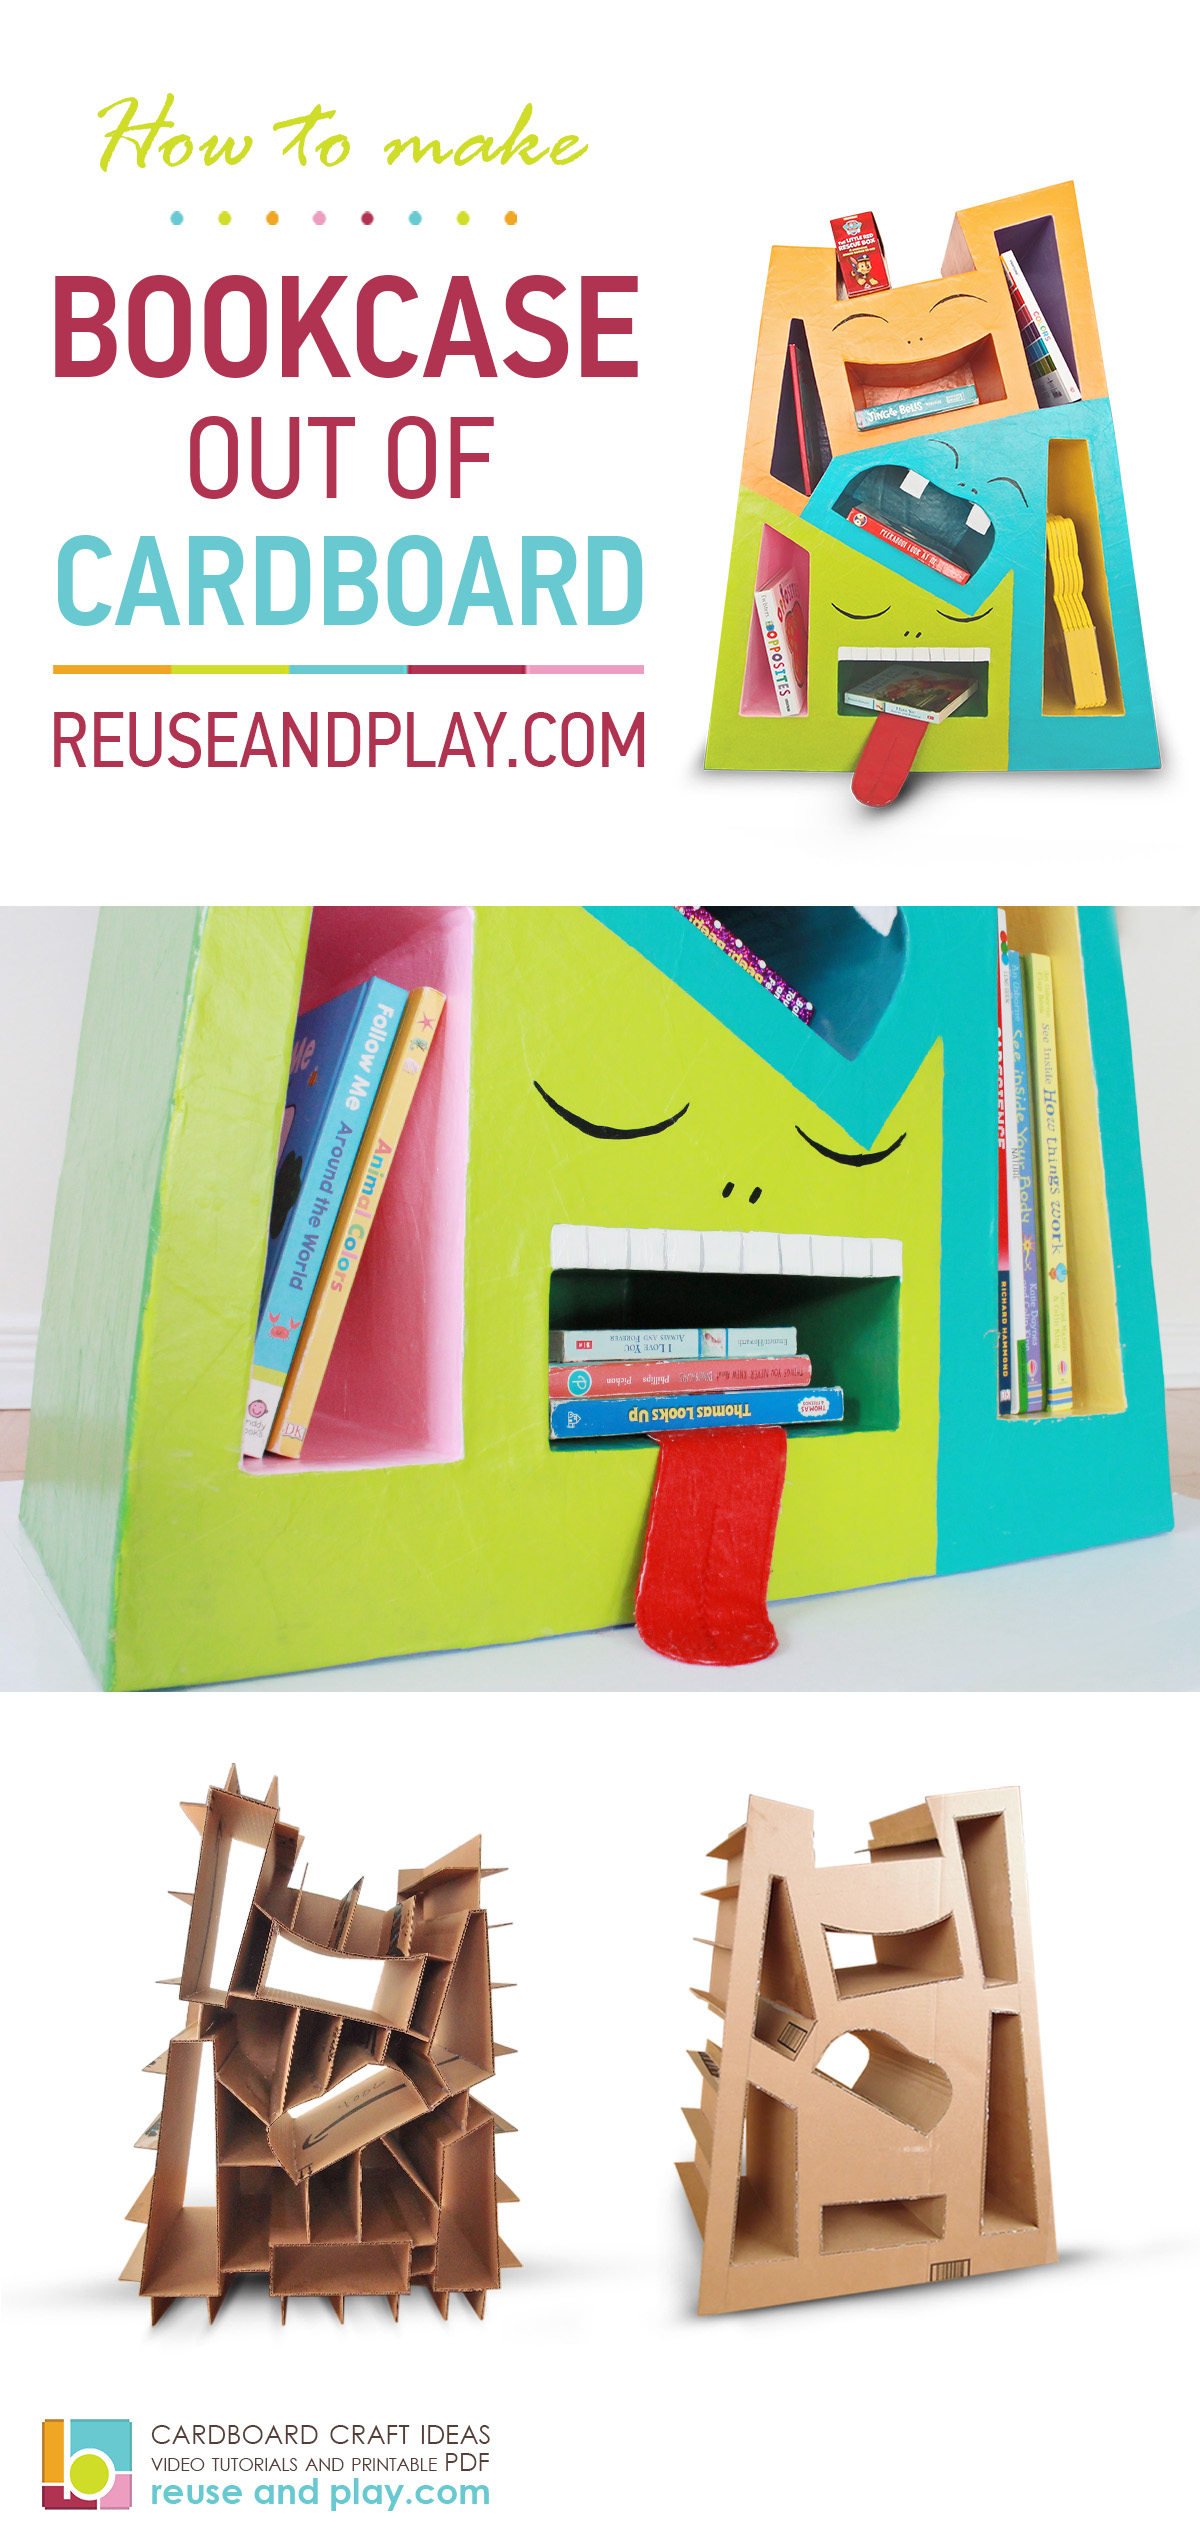 Cardboard Bookshelf Diy Furniture Out Of Cardboard Reuse And Play